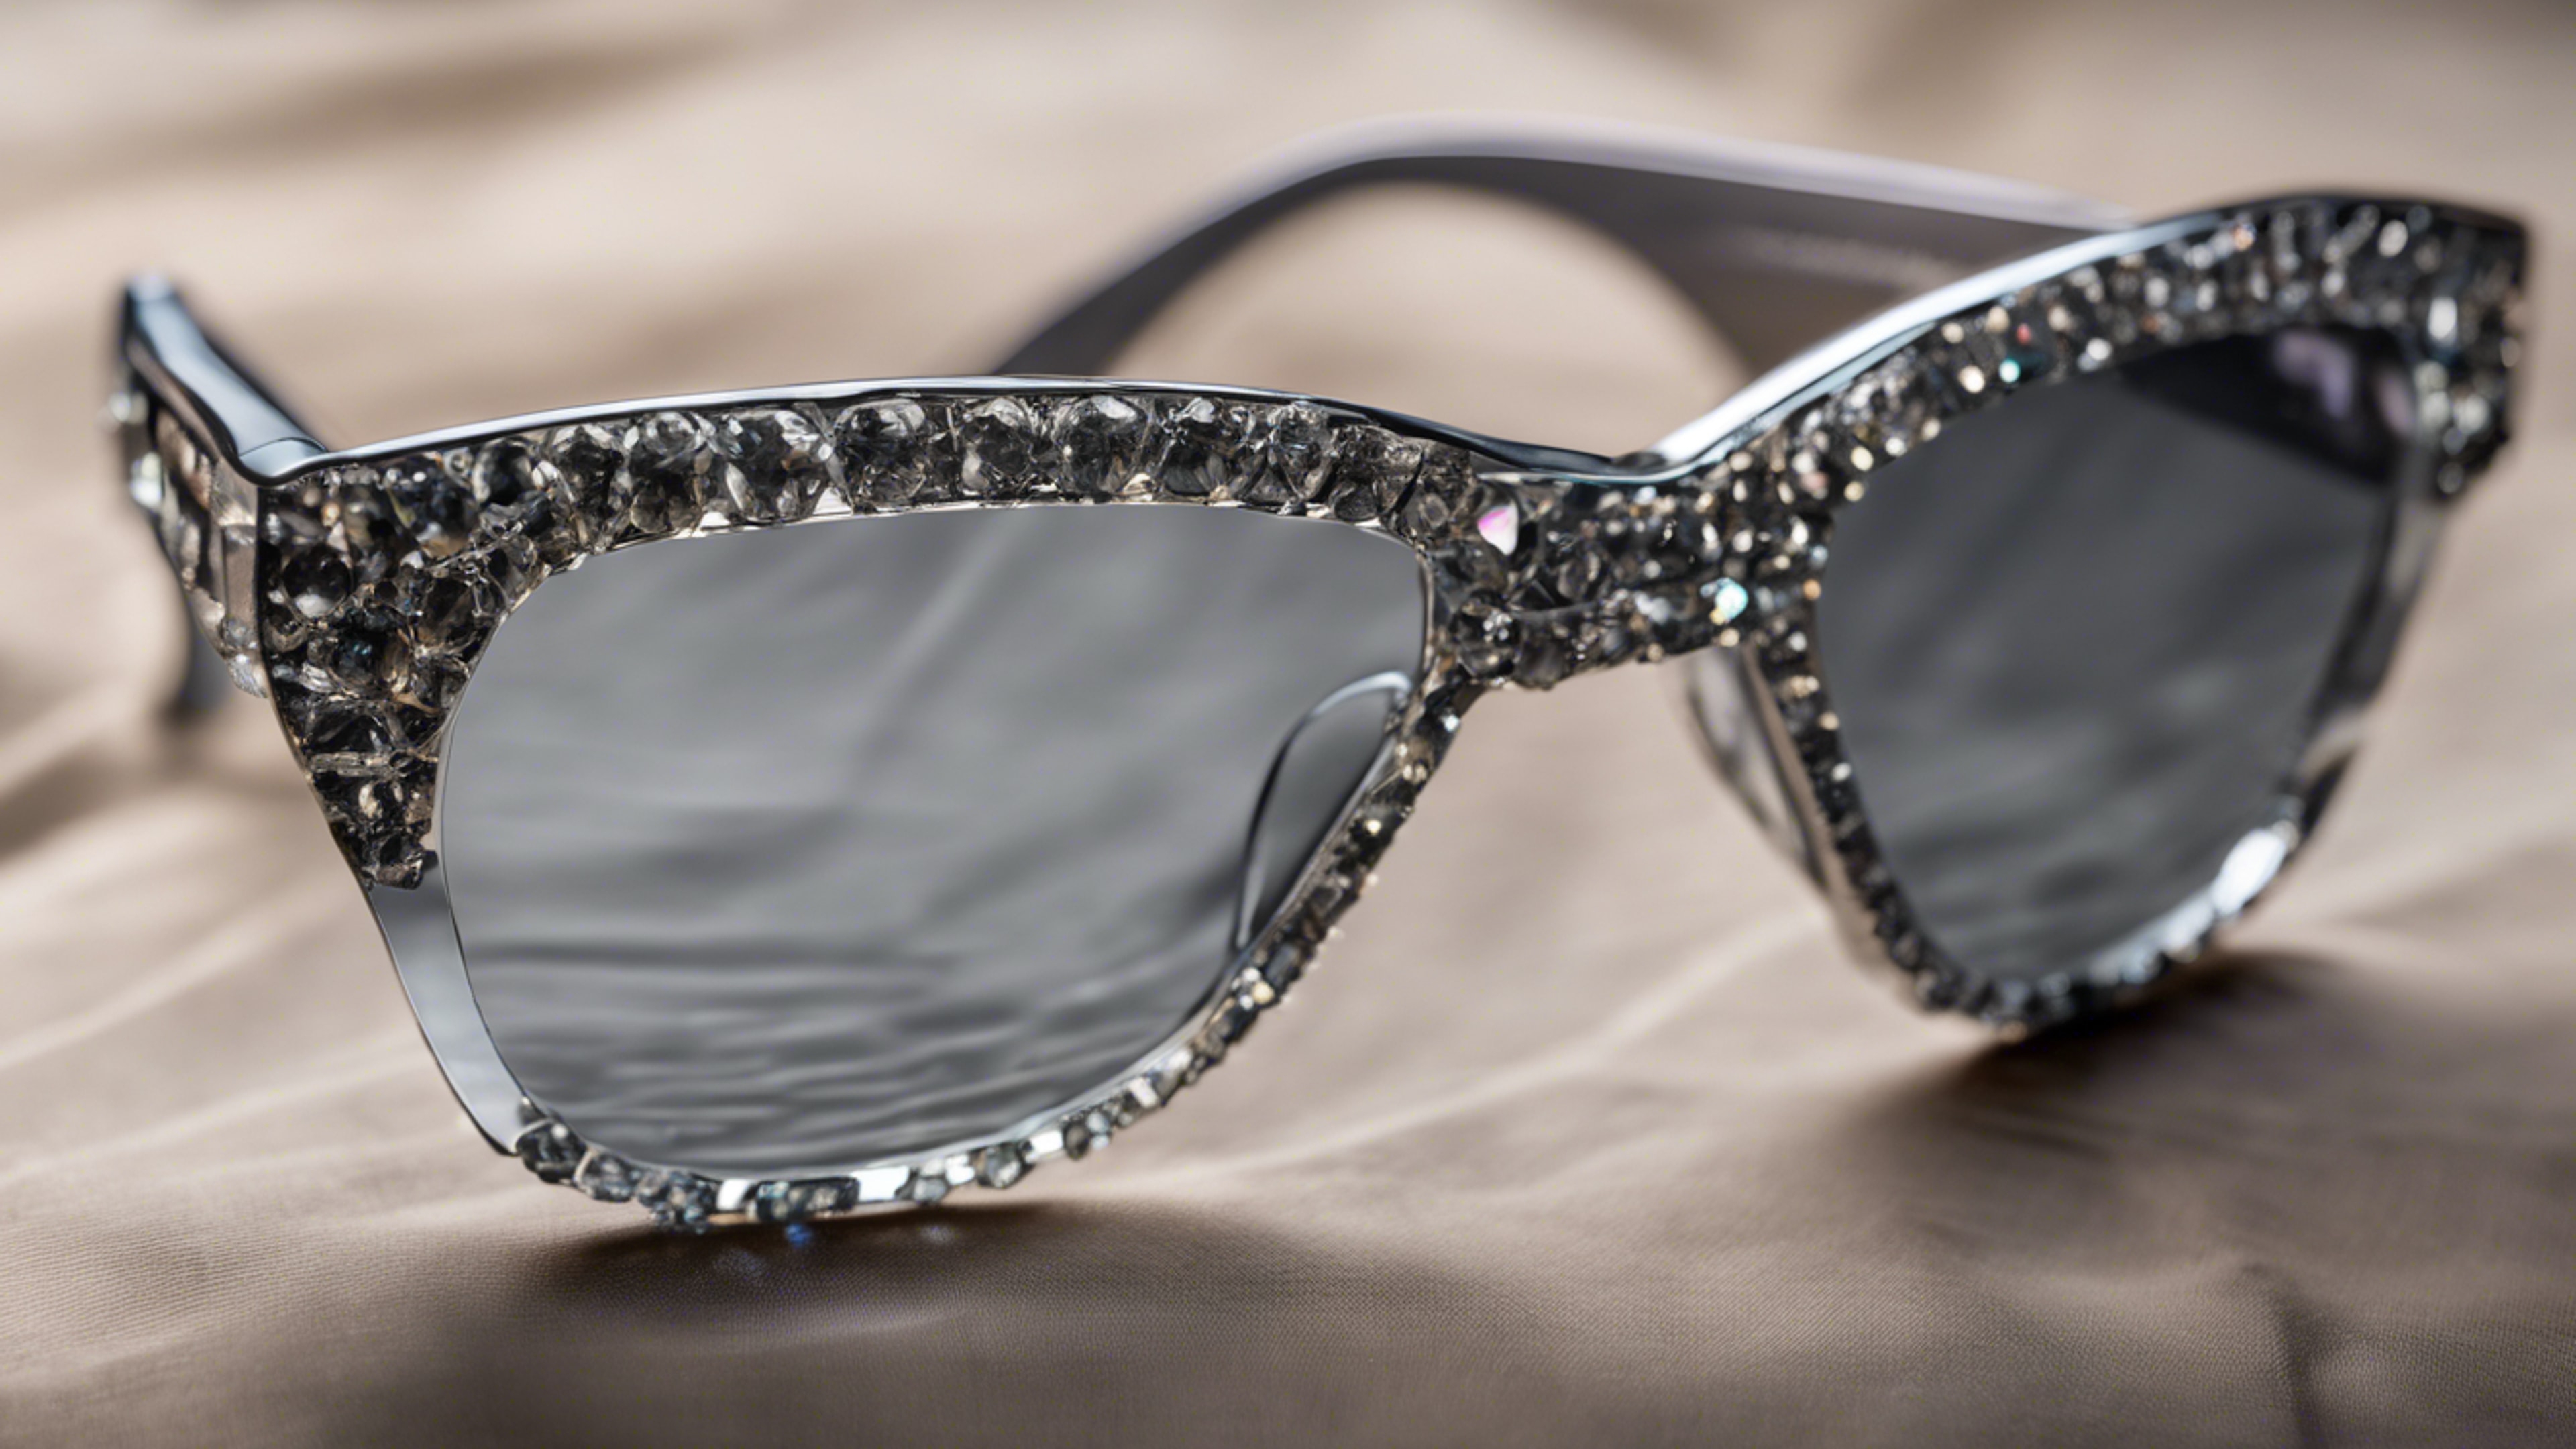 A pair of gray diamond encrusted glasses, epitomizing luxury and status. Обои[6d0b74d92658455f9dbd]